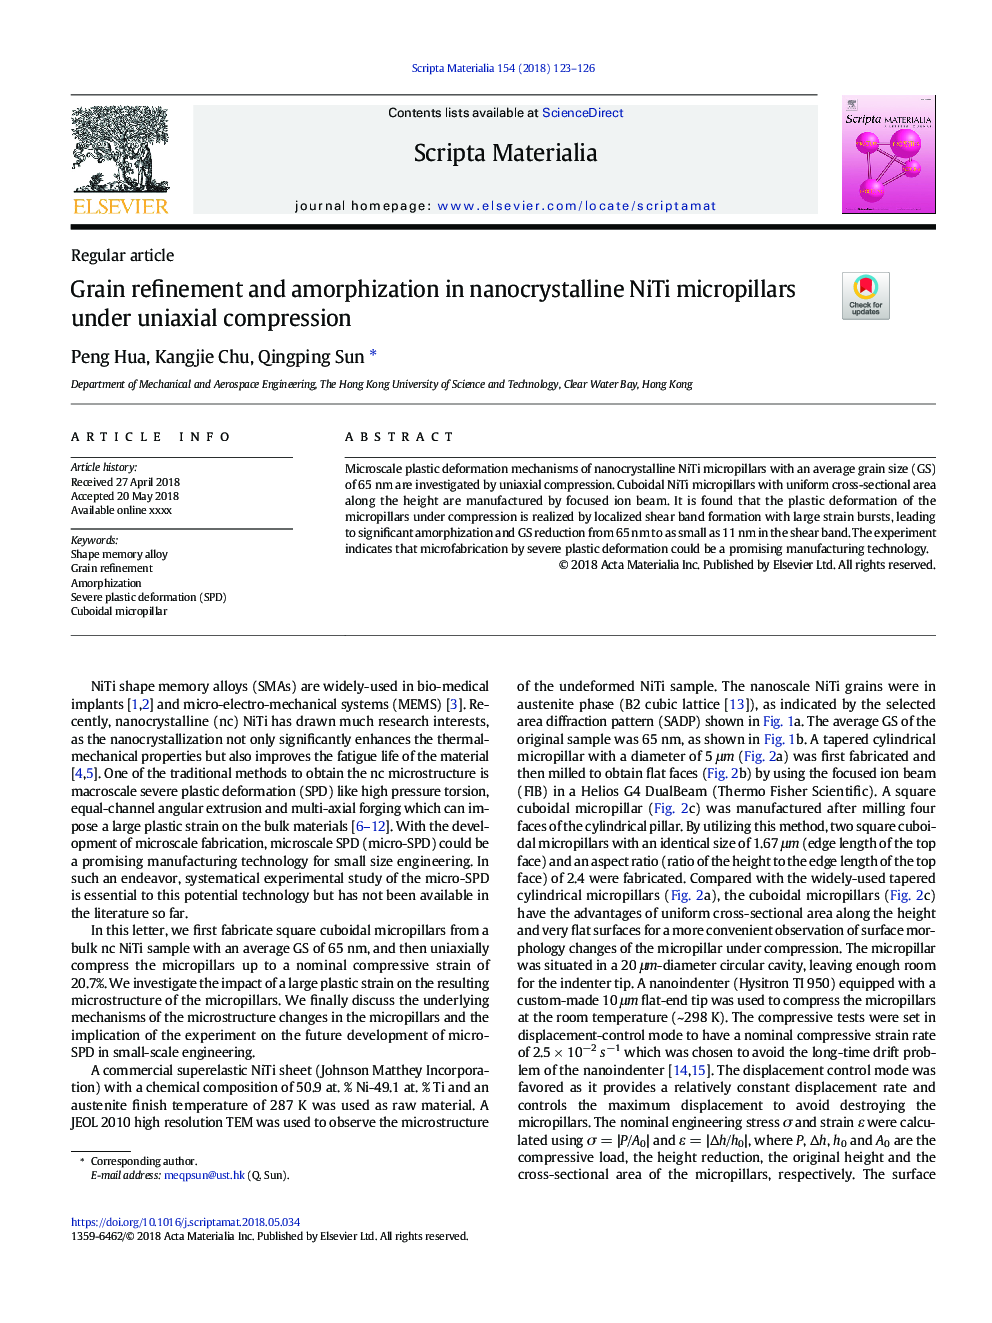 Grain refinement and amorphization in nanocrystalline NiTi micropillars under uniaxial compression